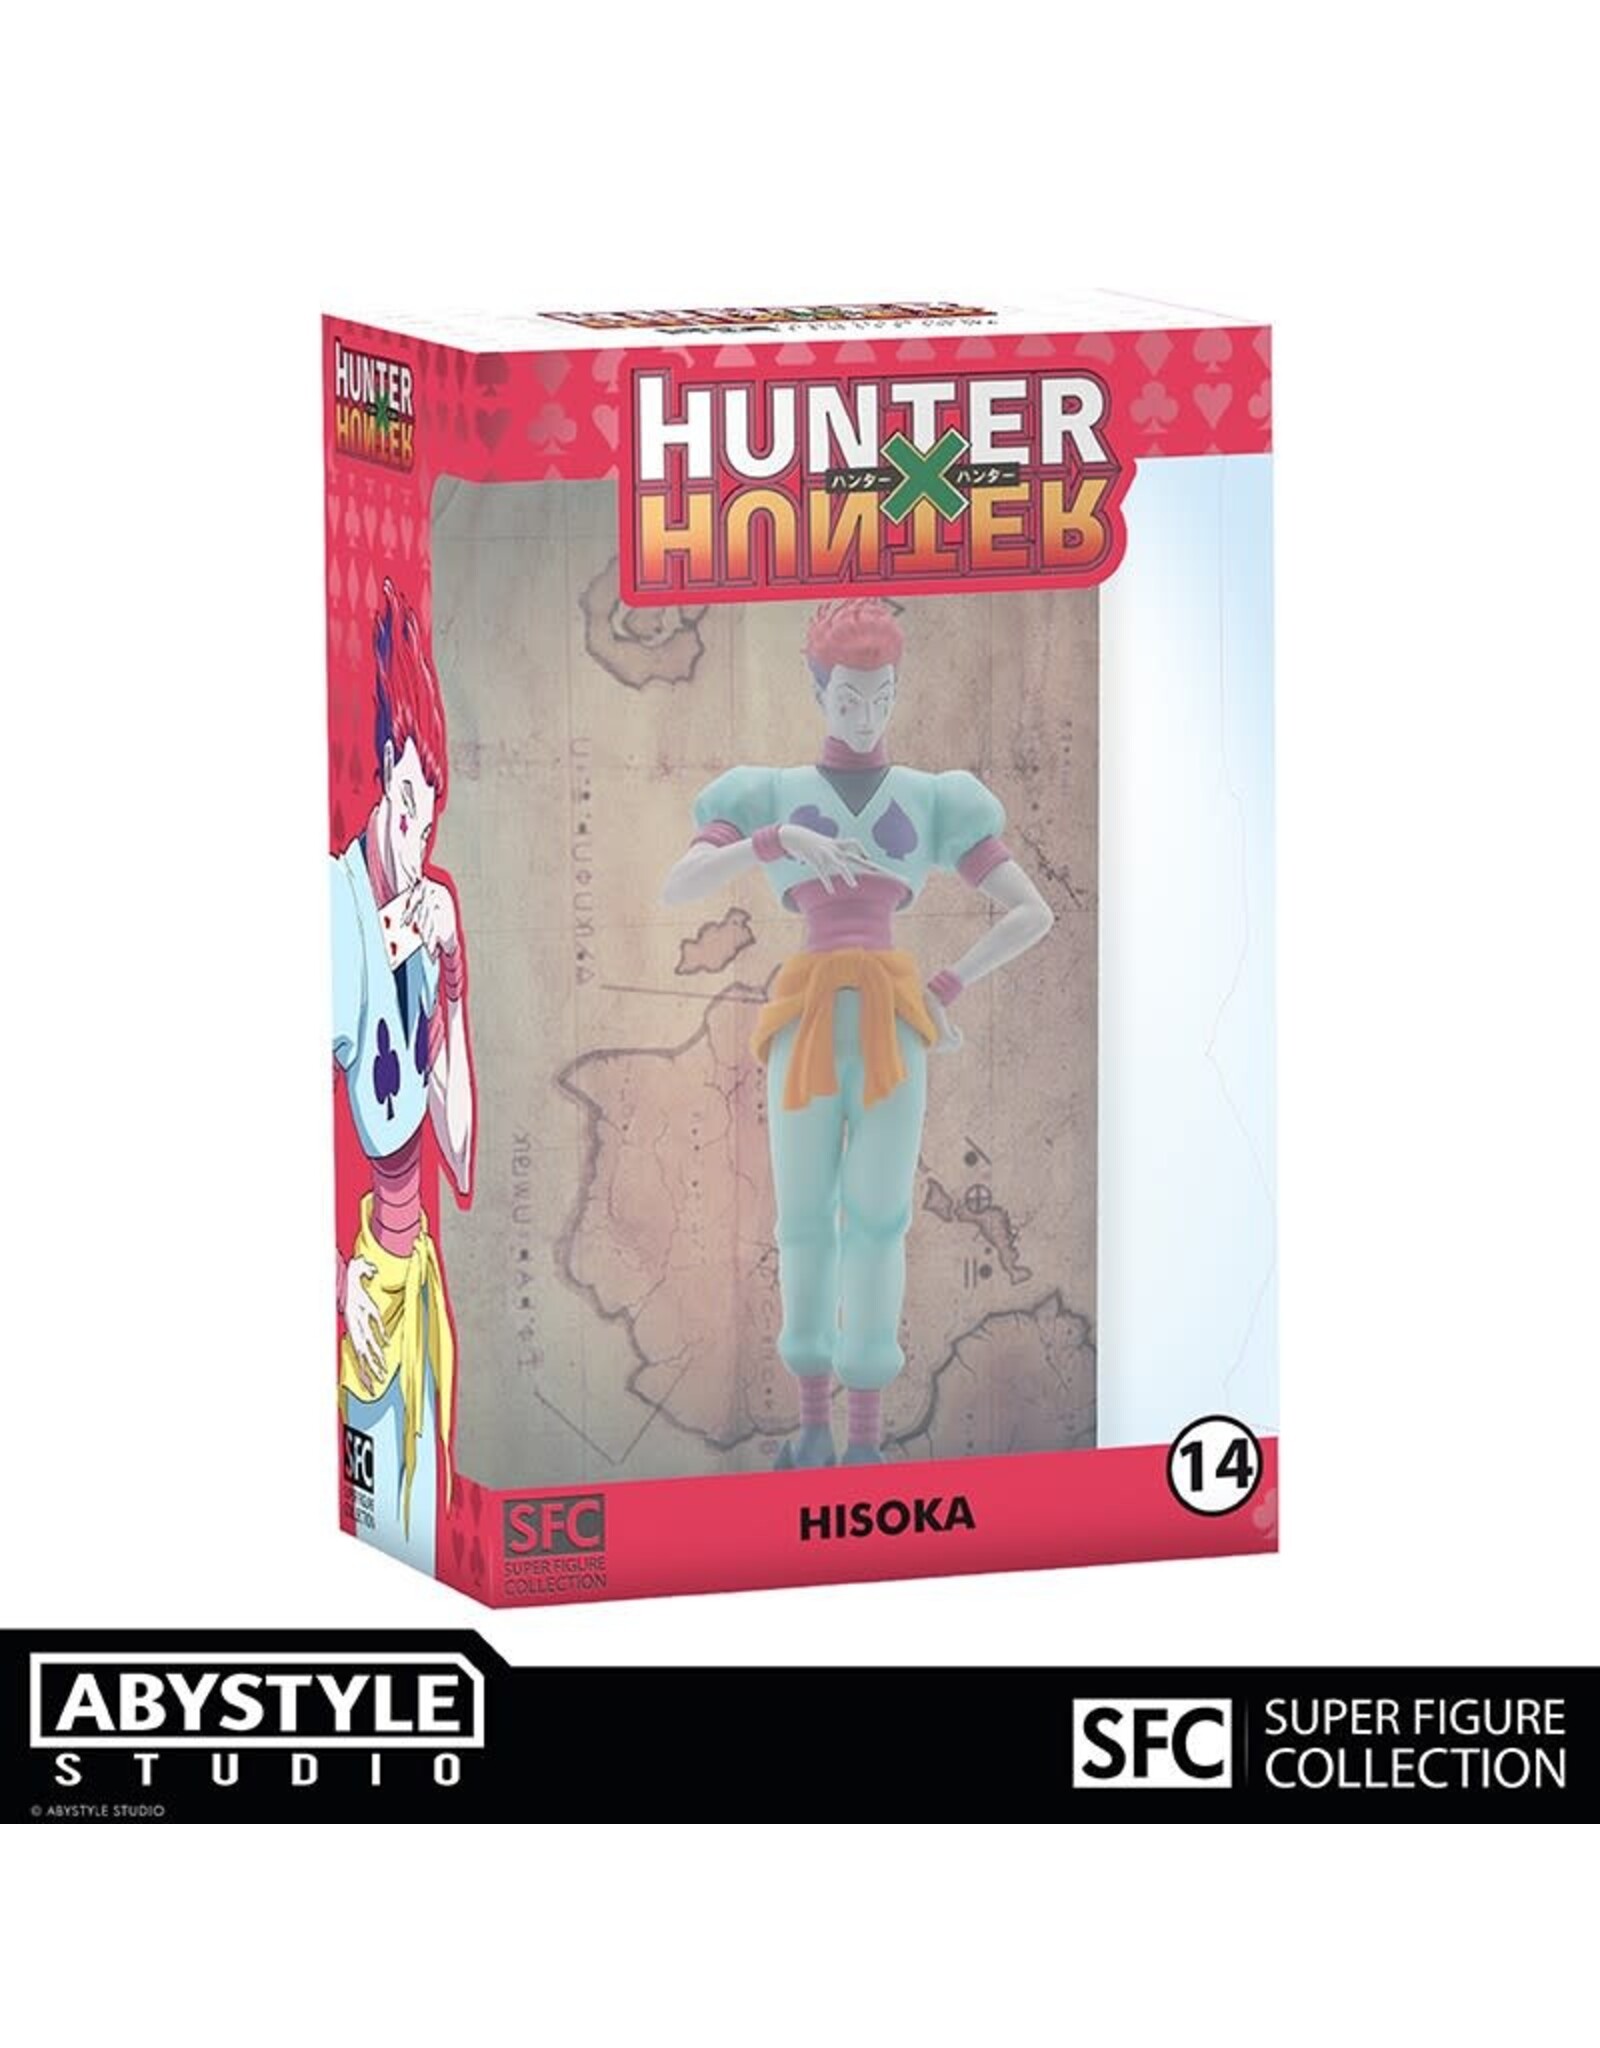 ABYSTYLE Super Figure Collection : Hunter X Hunter - Hisoka Figure